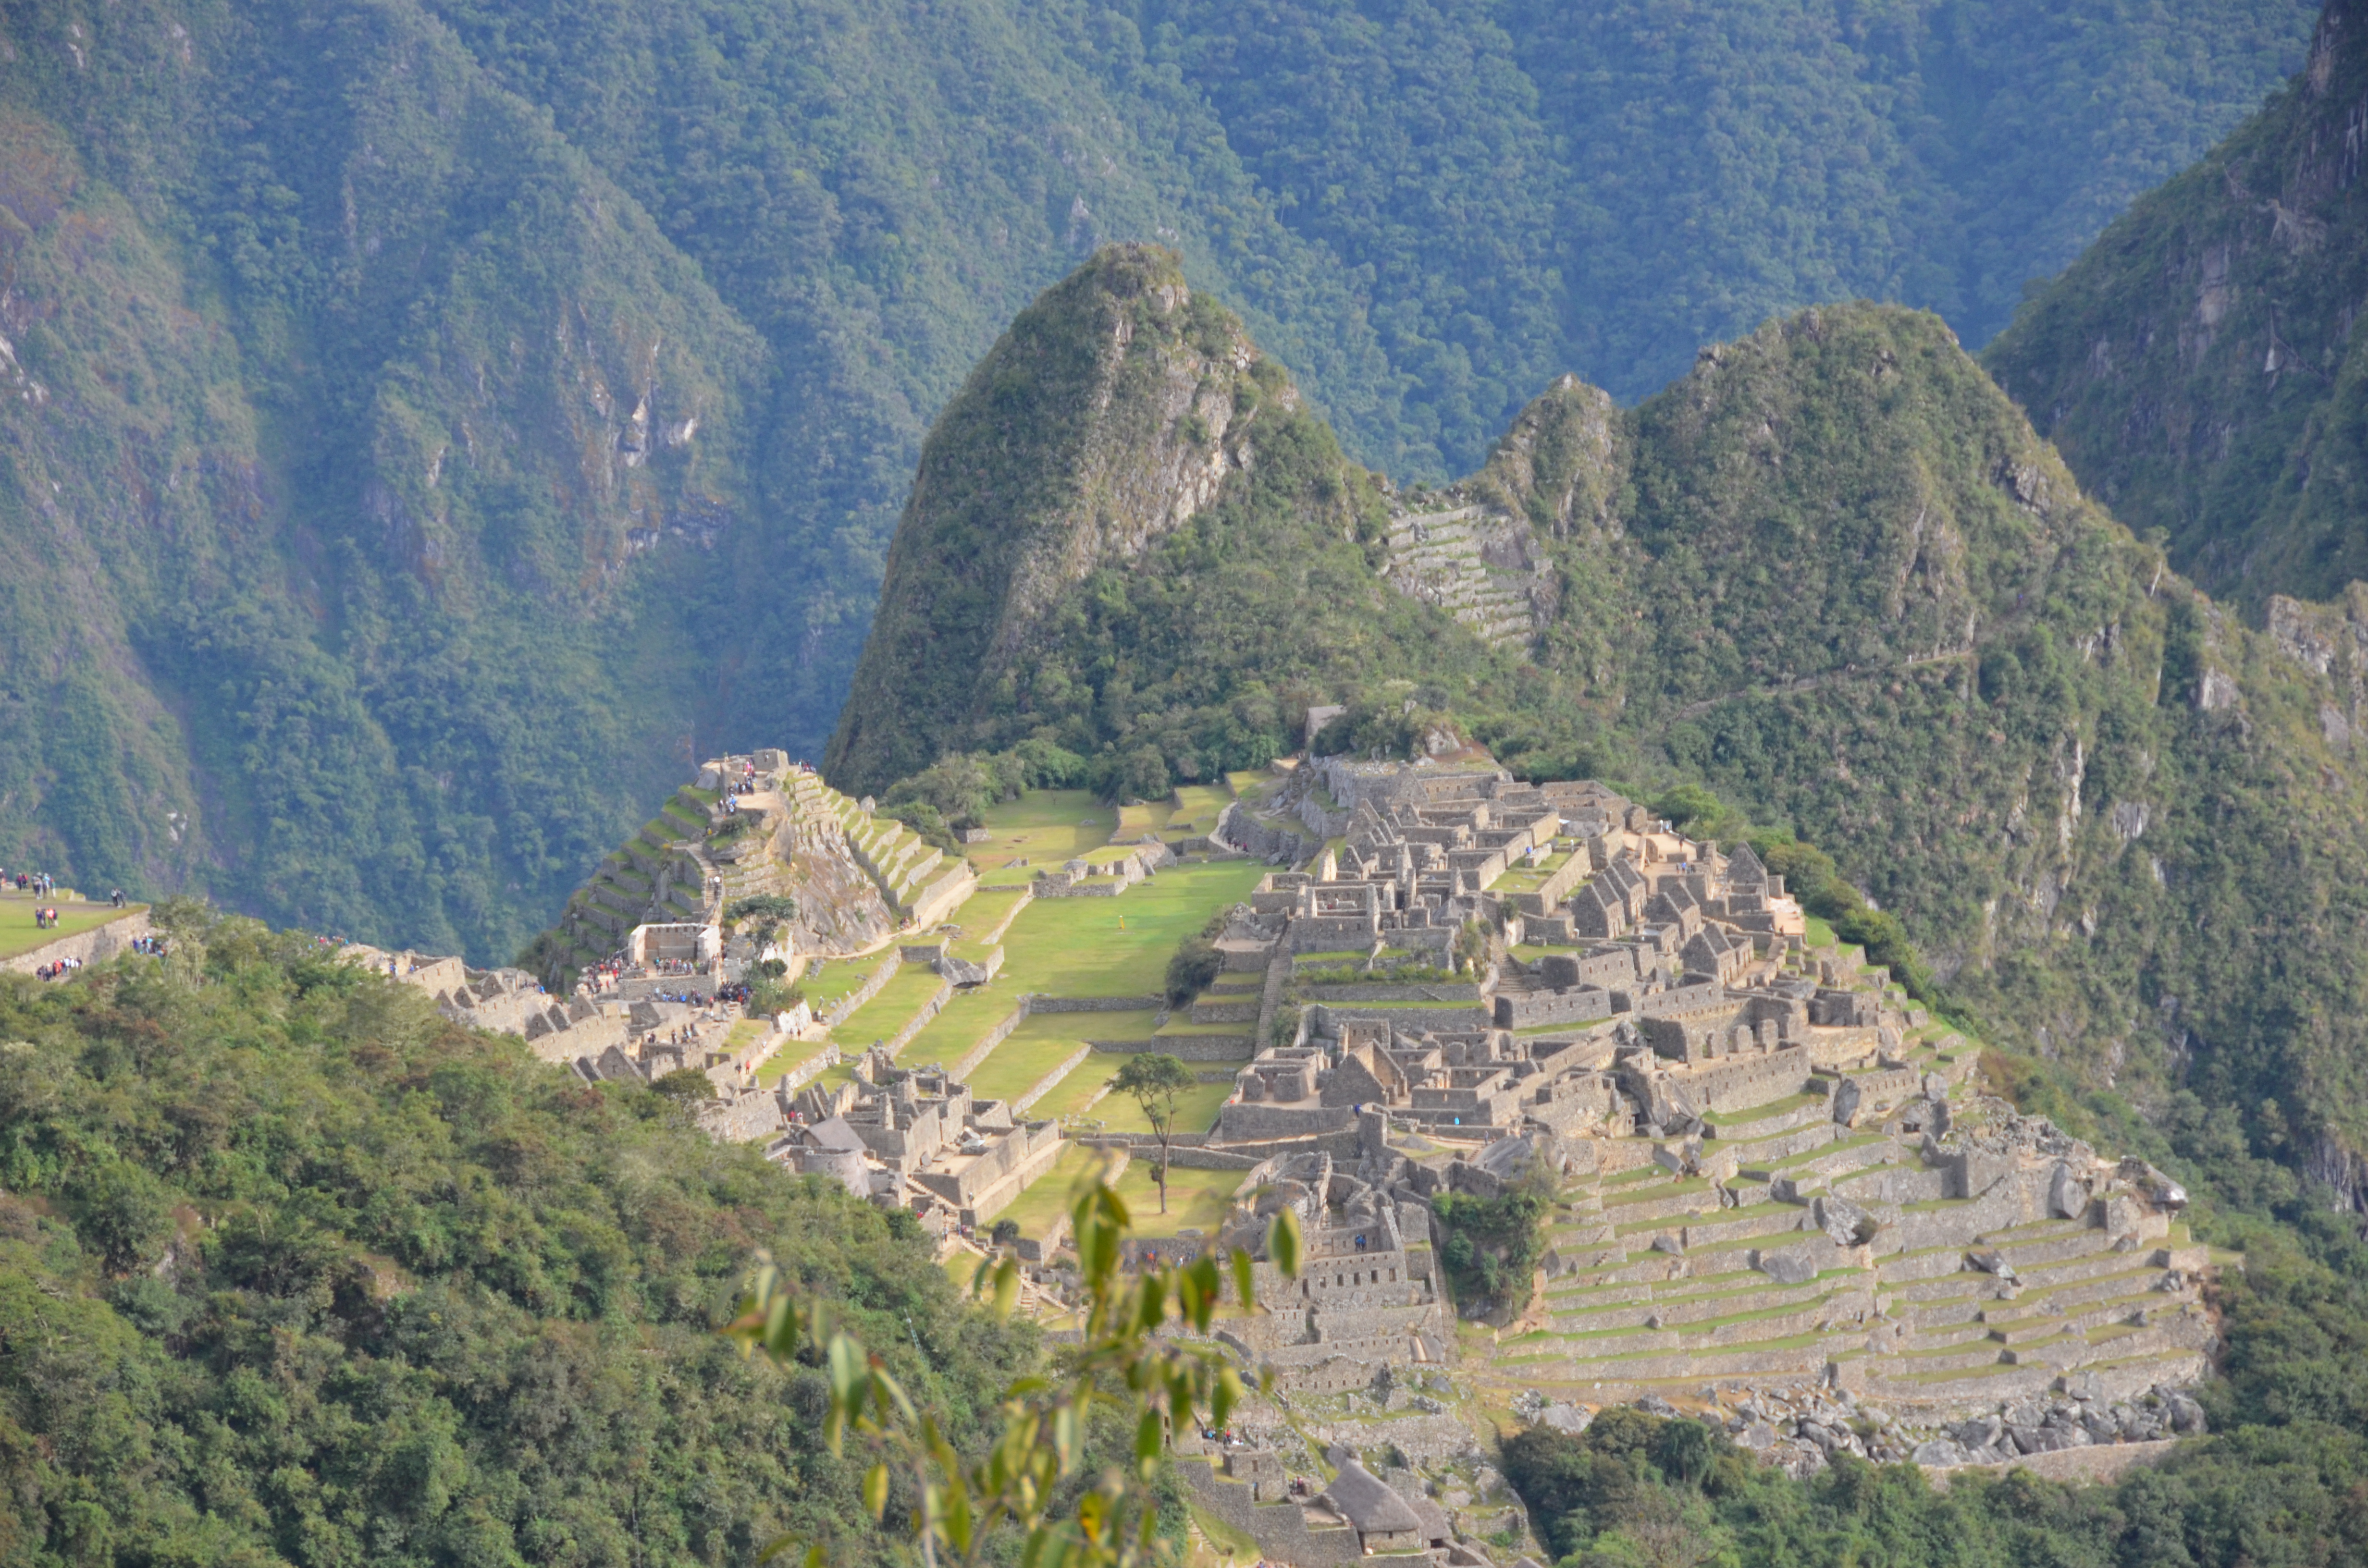 The City of Machu Picchu